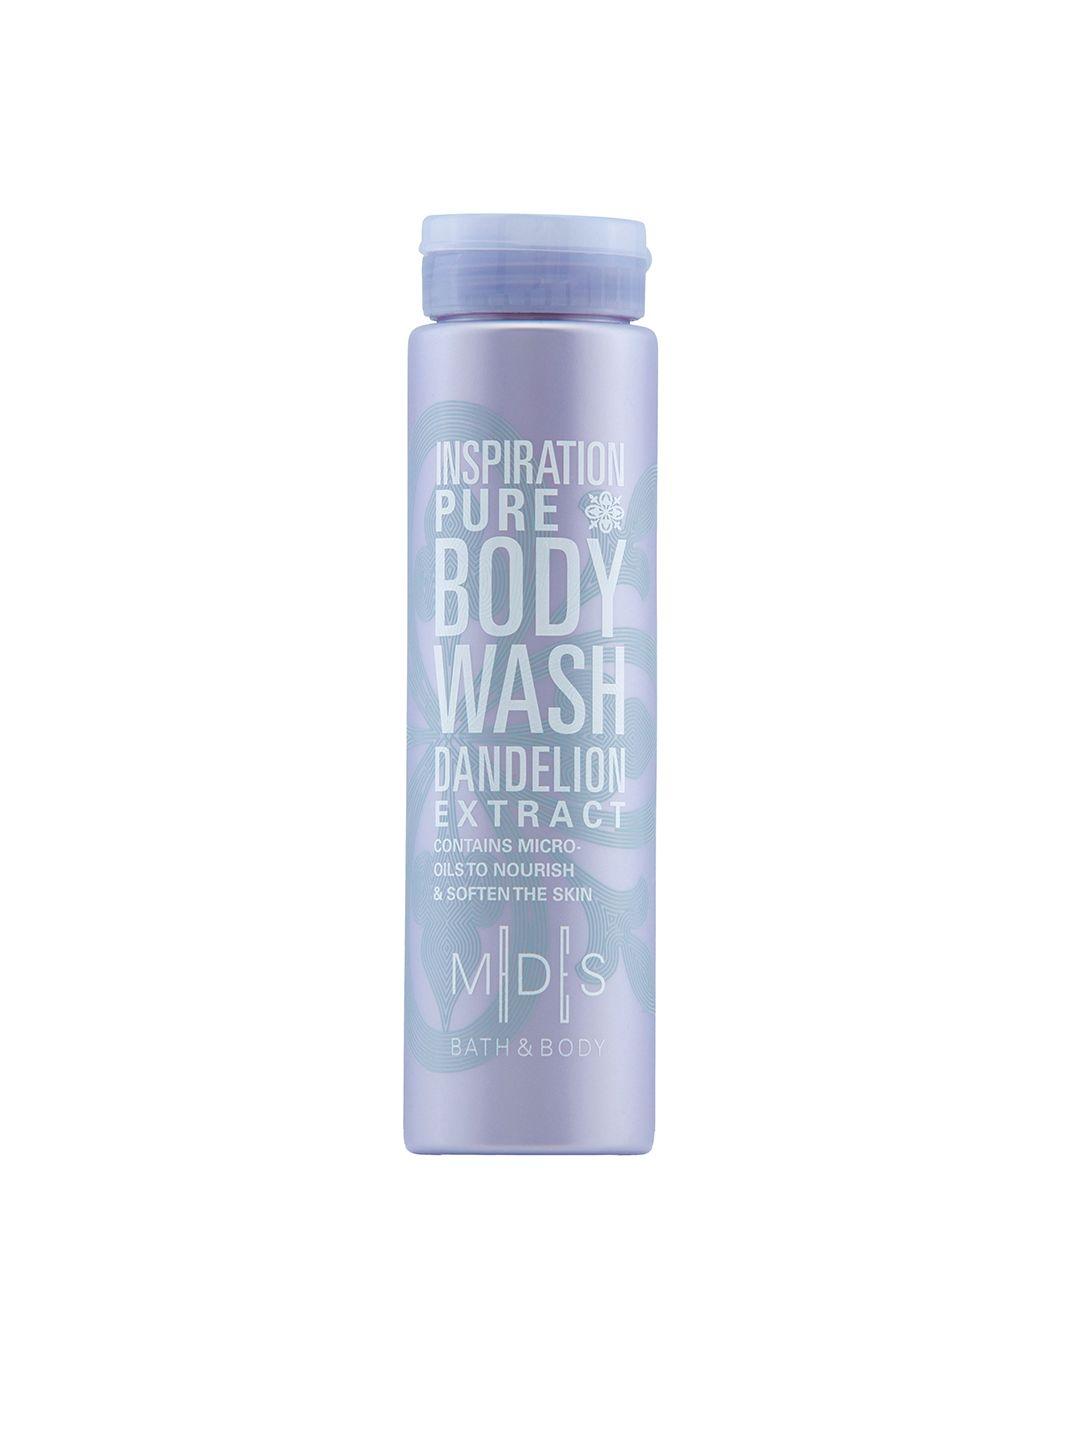 mades unisex bath & body inspiration pure dandelion extract body wash 200 ml